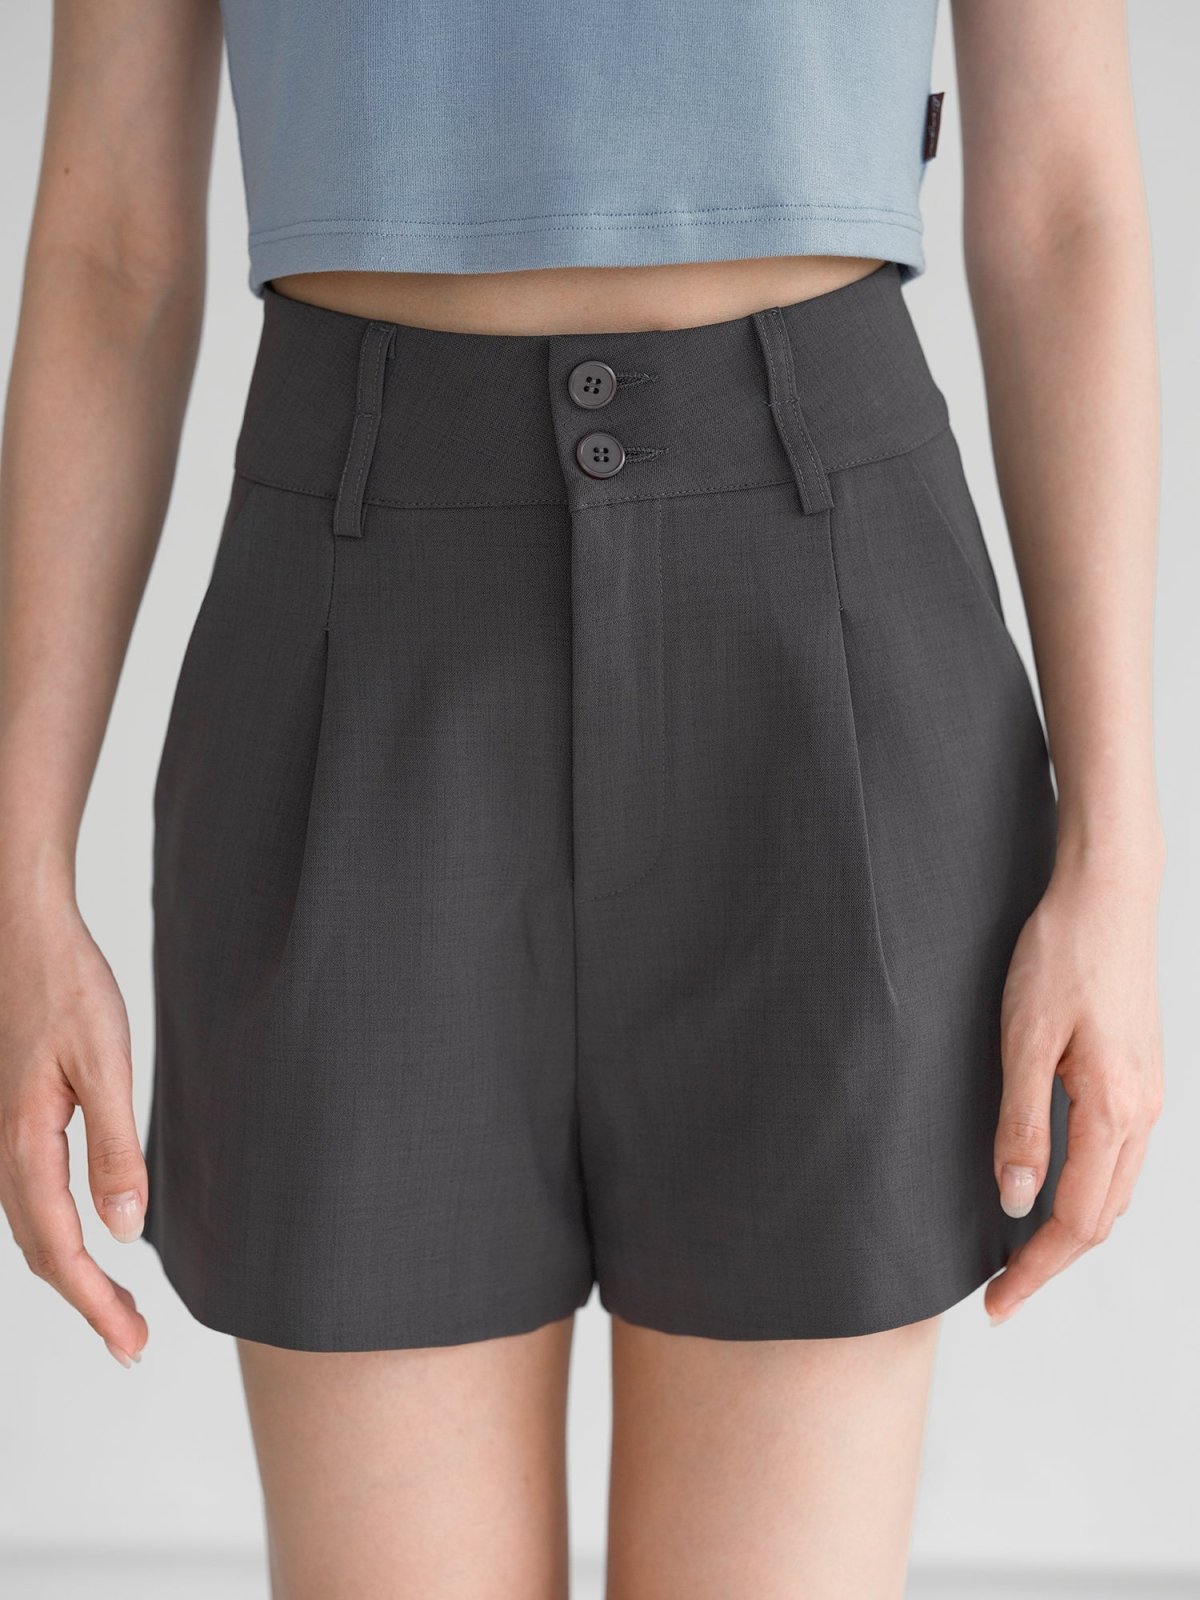 Hairo High Waist Shorts - DAG-G-220138GreyS - Charcoal - S - D'ZAGE Designs